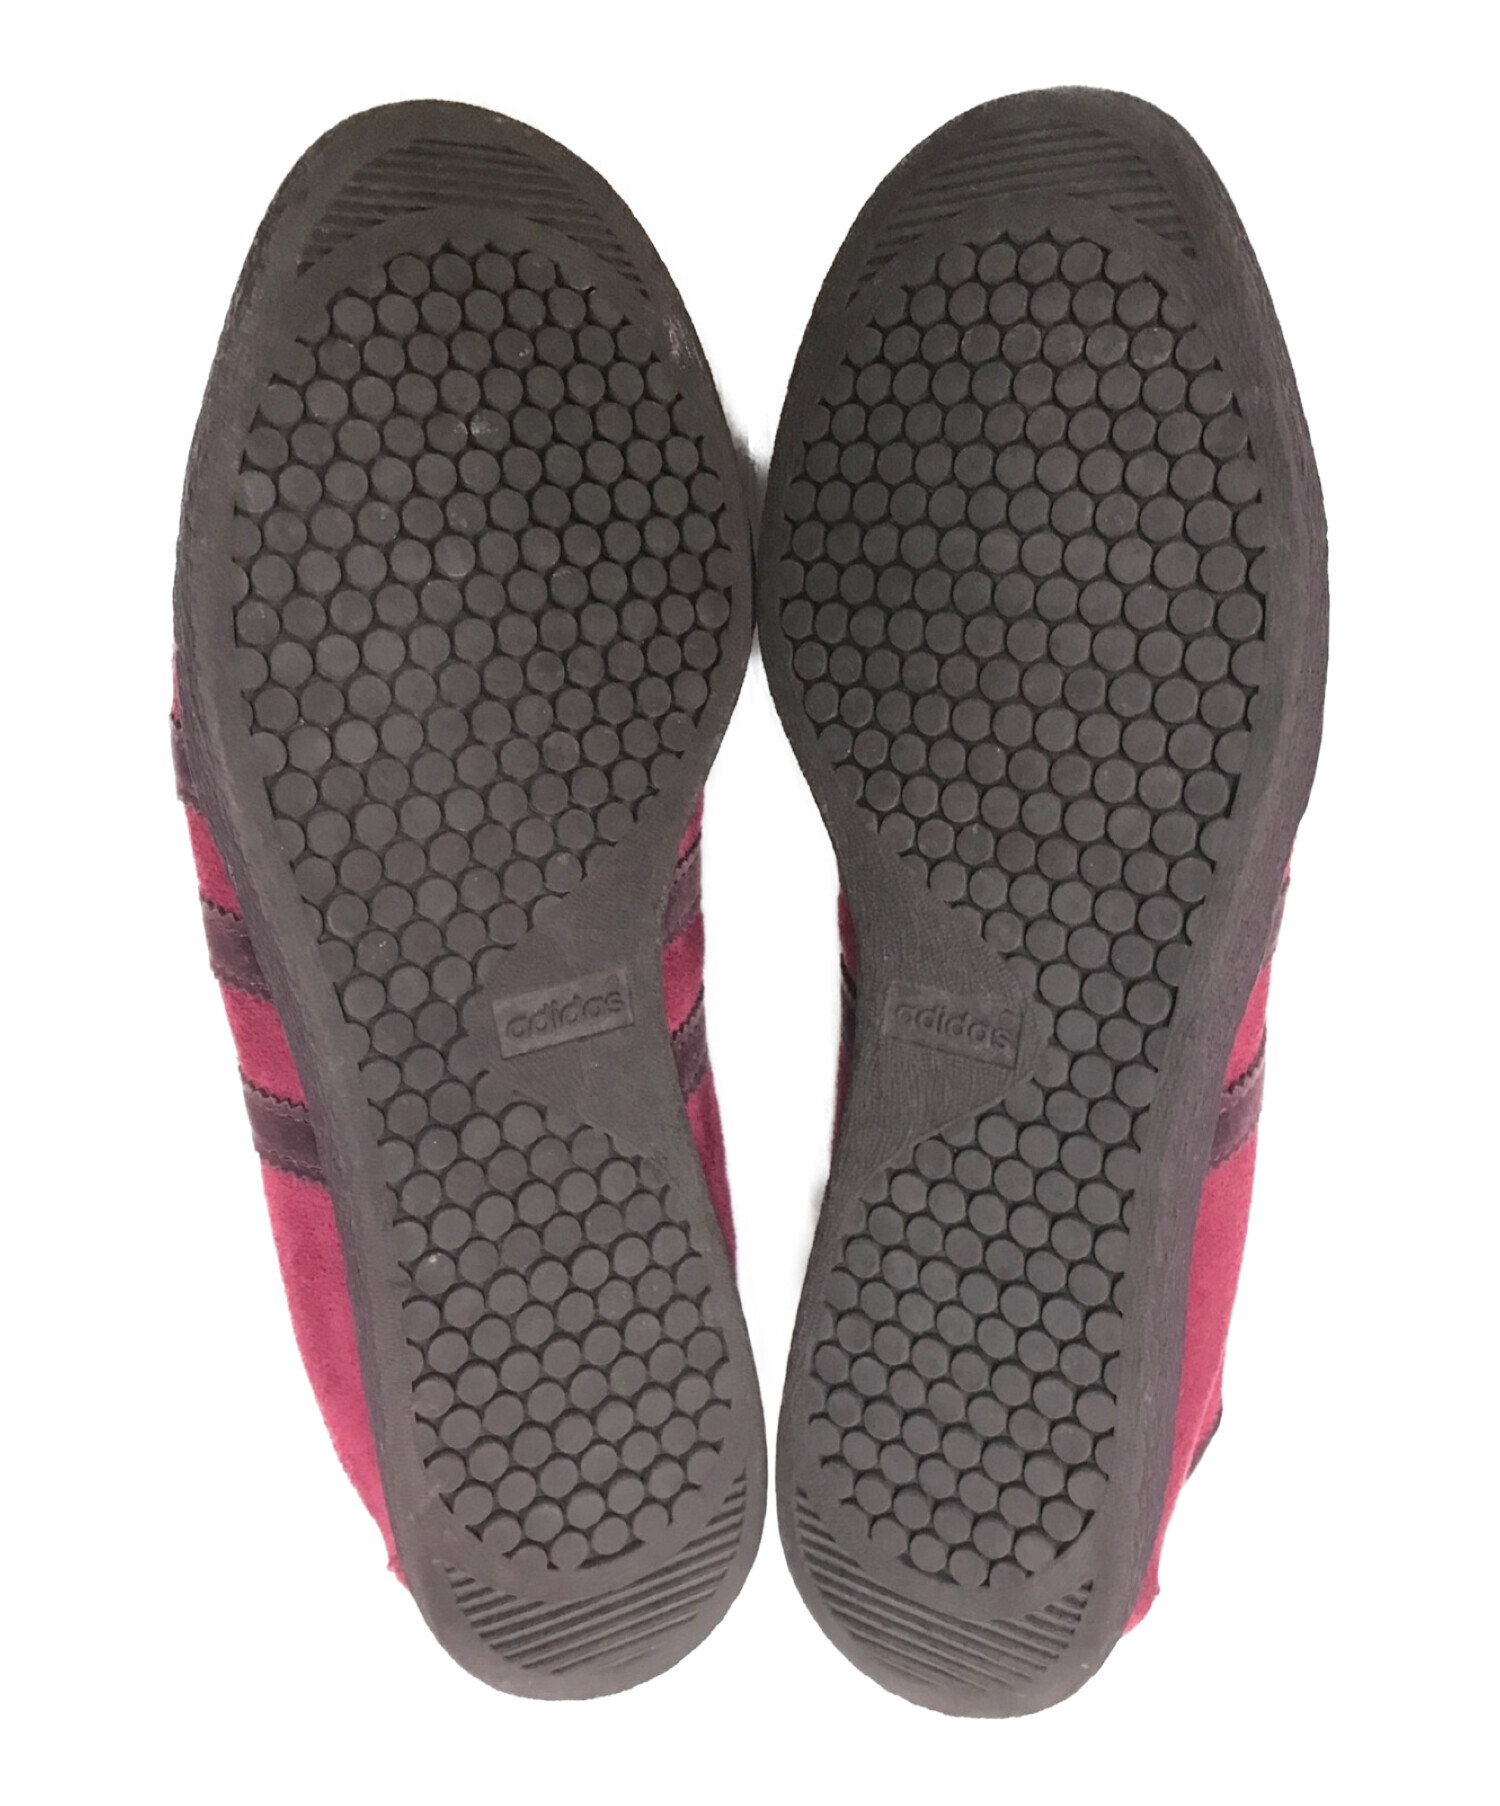 adidas (アディダス) TOBACCO GRUEN ボルドー サイズ:27.5cm